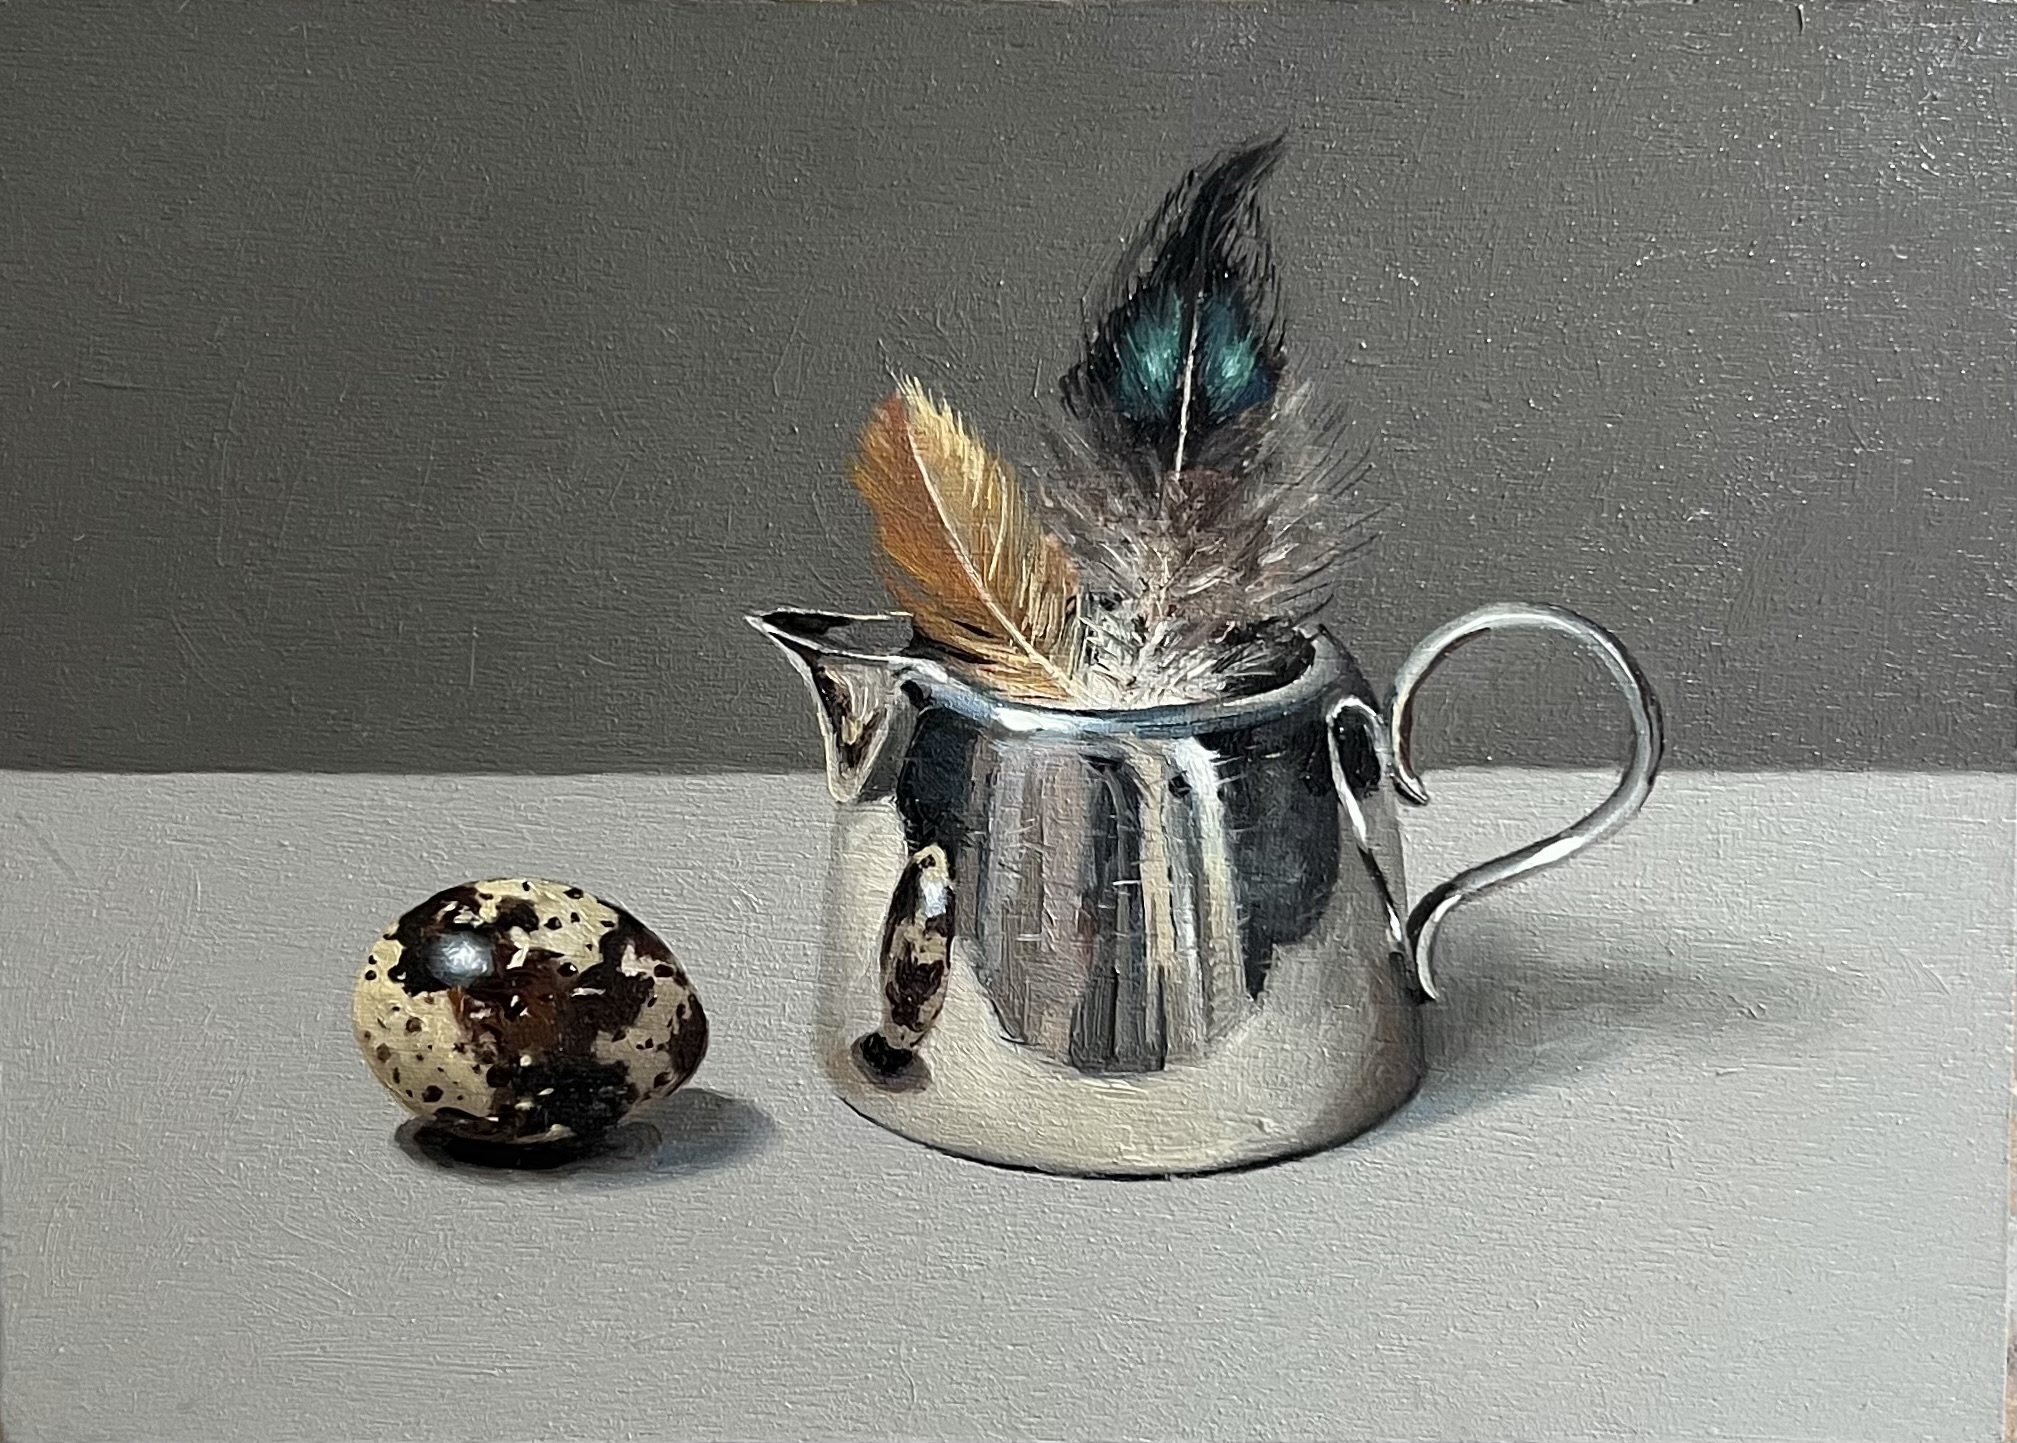 Quail egg, quail feathers and silver jug